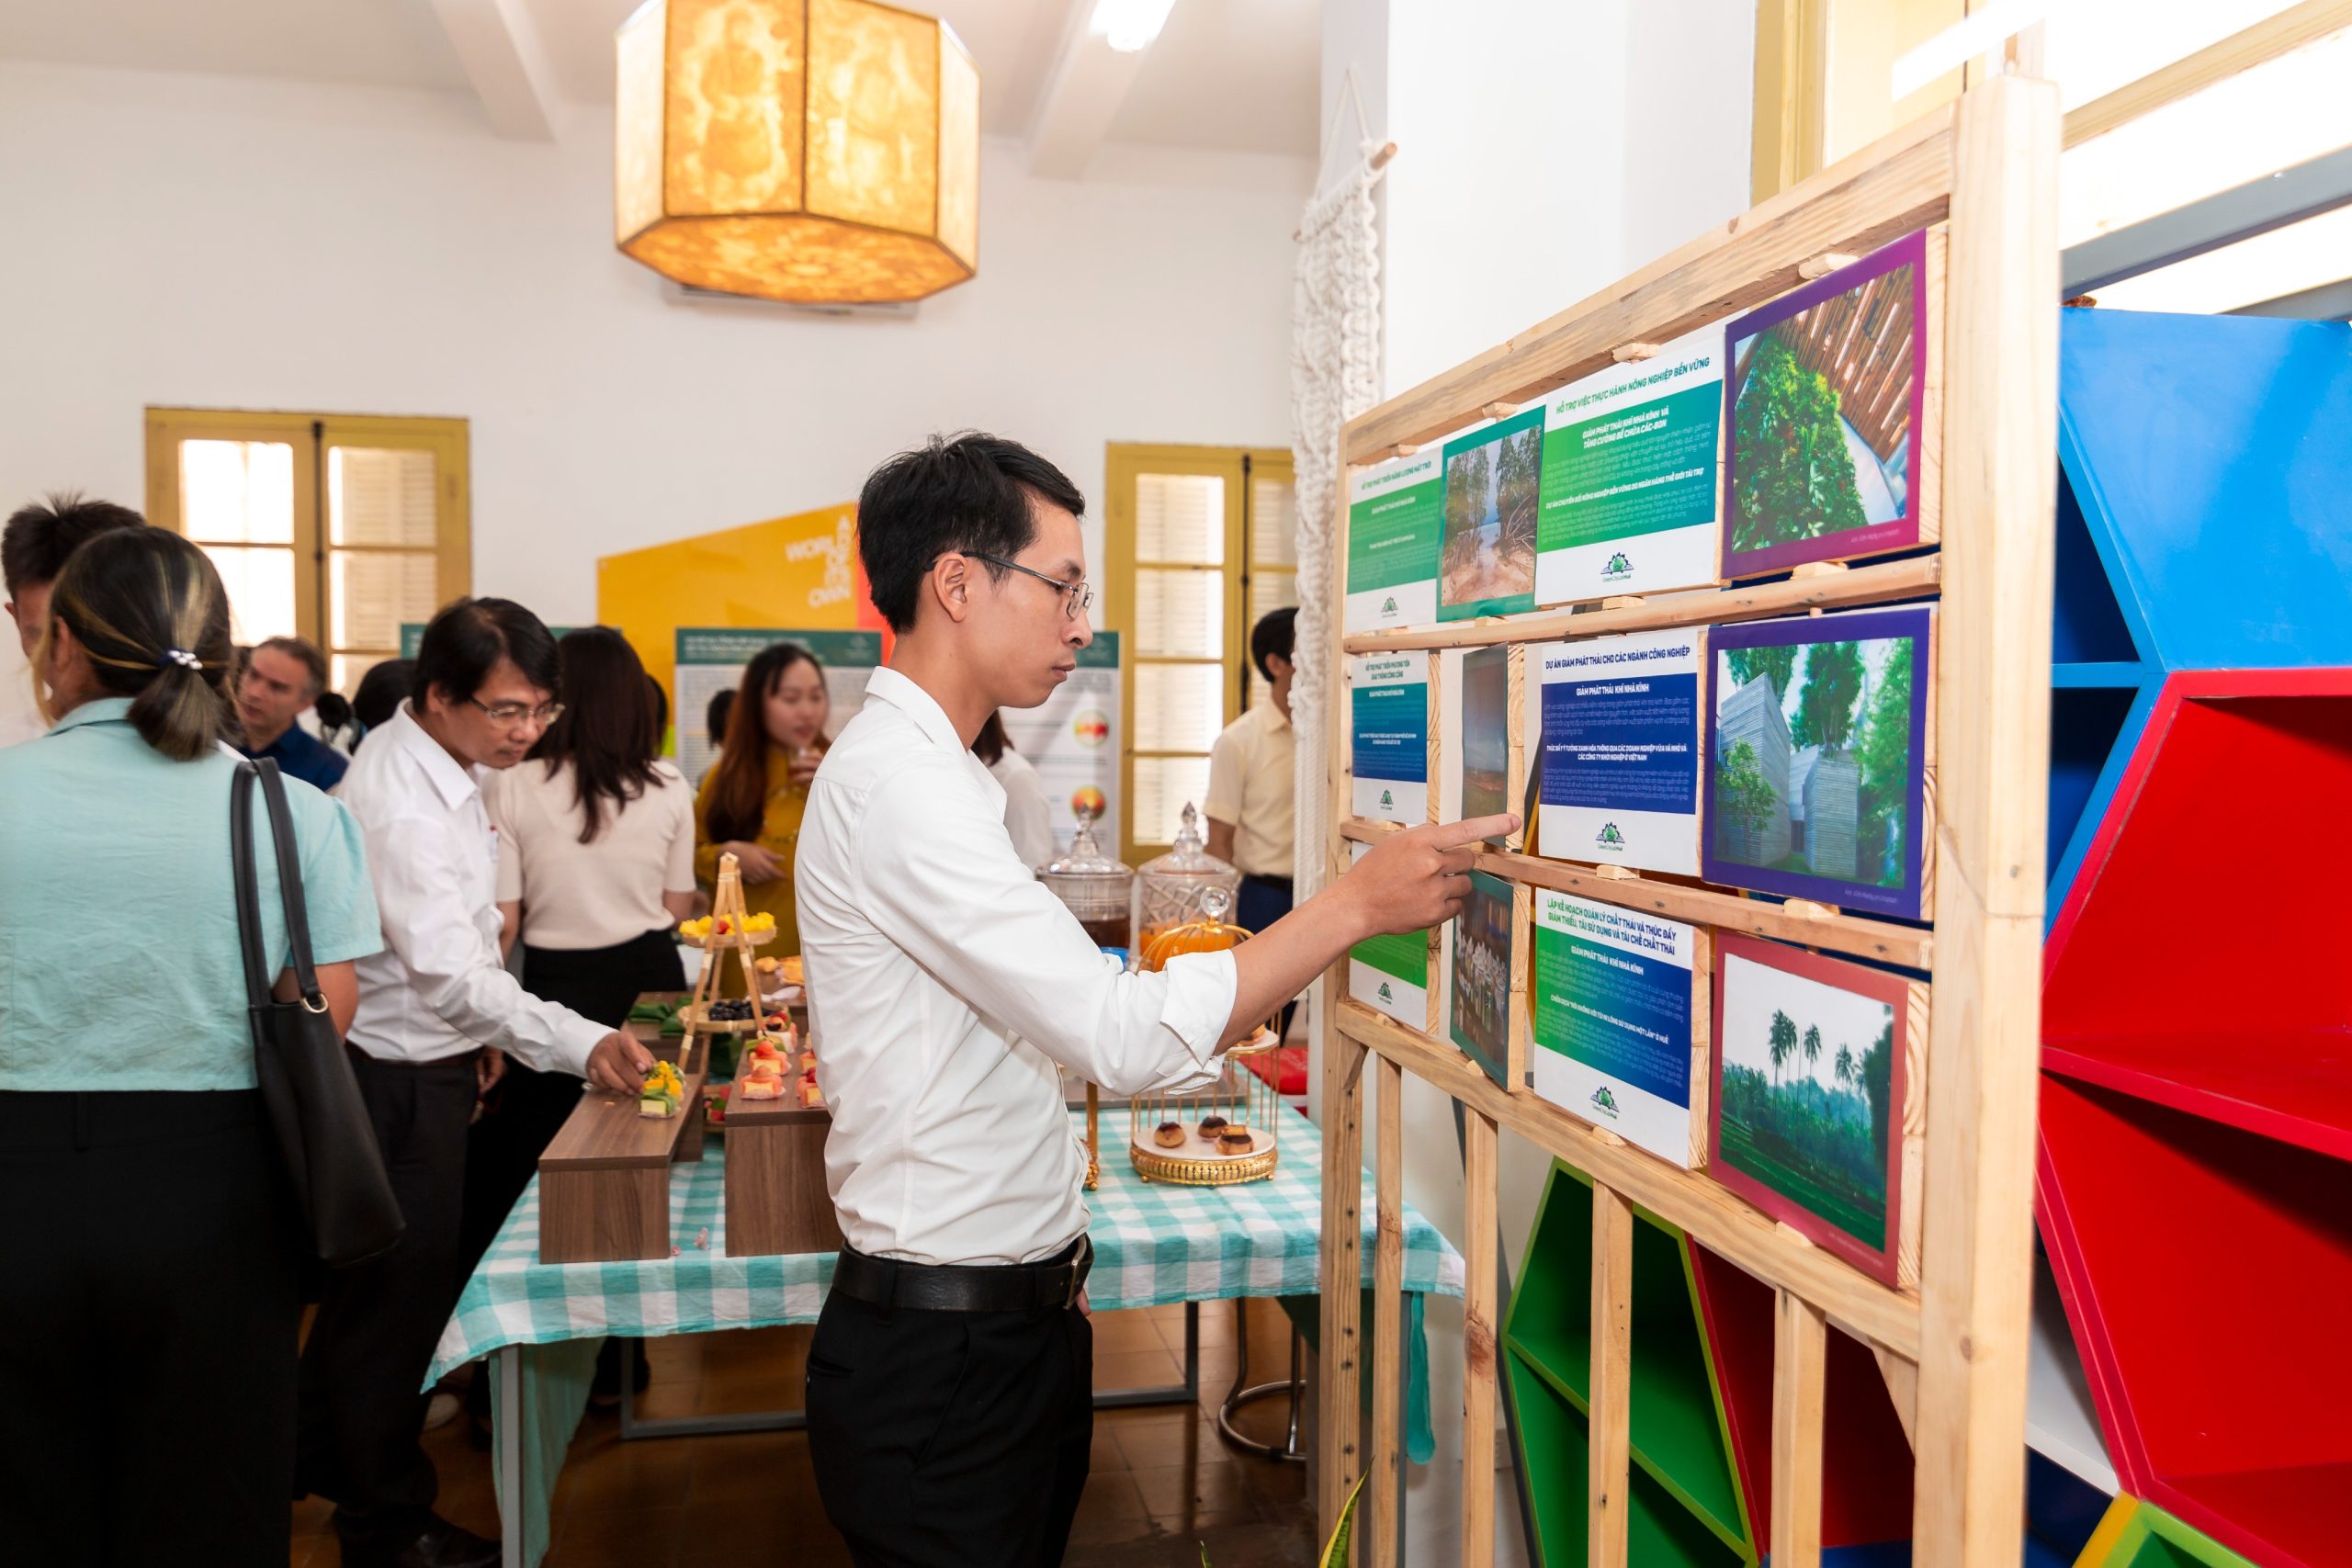 The GreenCityLabHuế Exhibition/Display